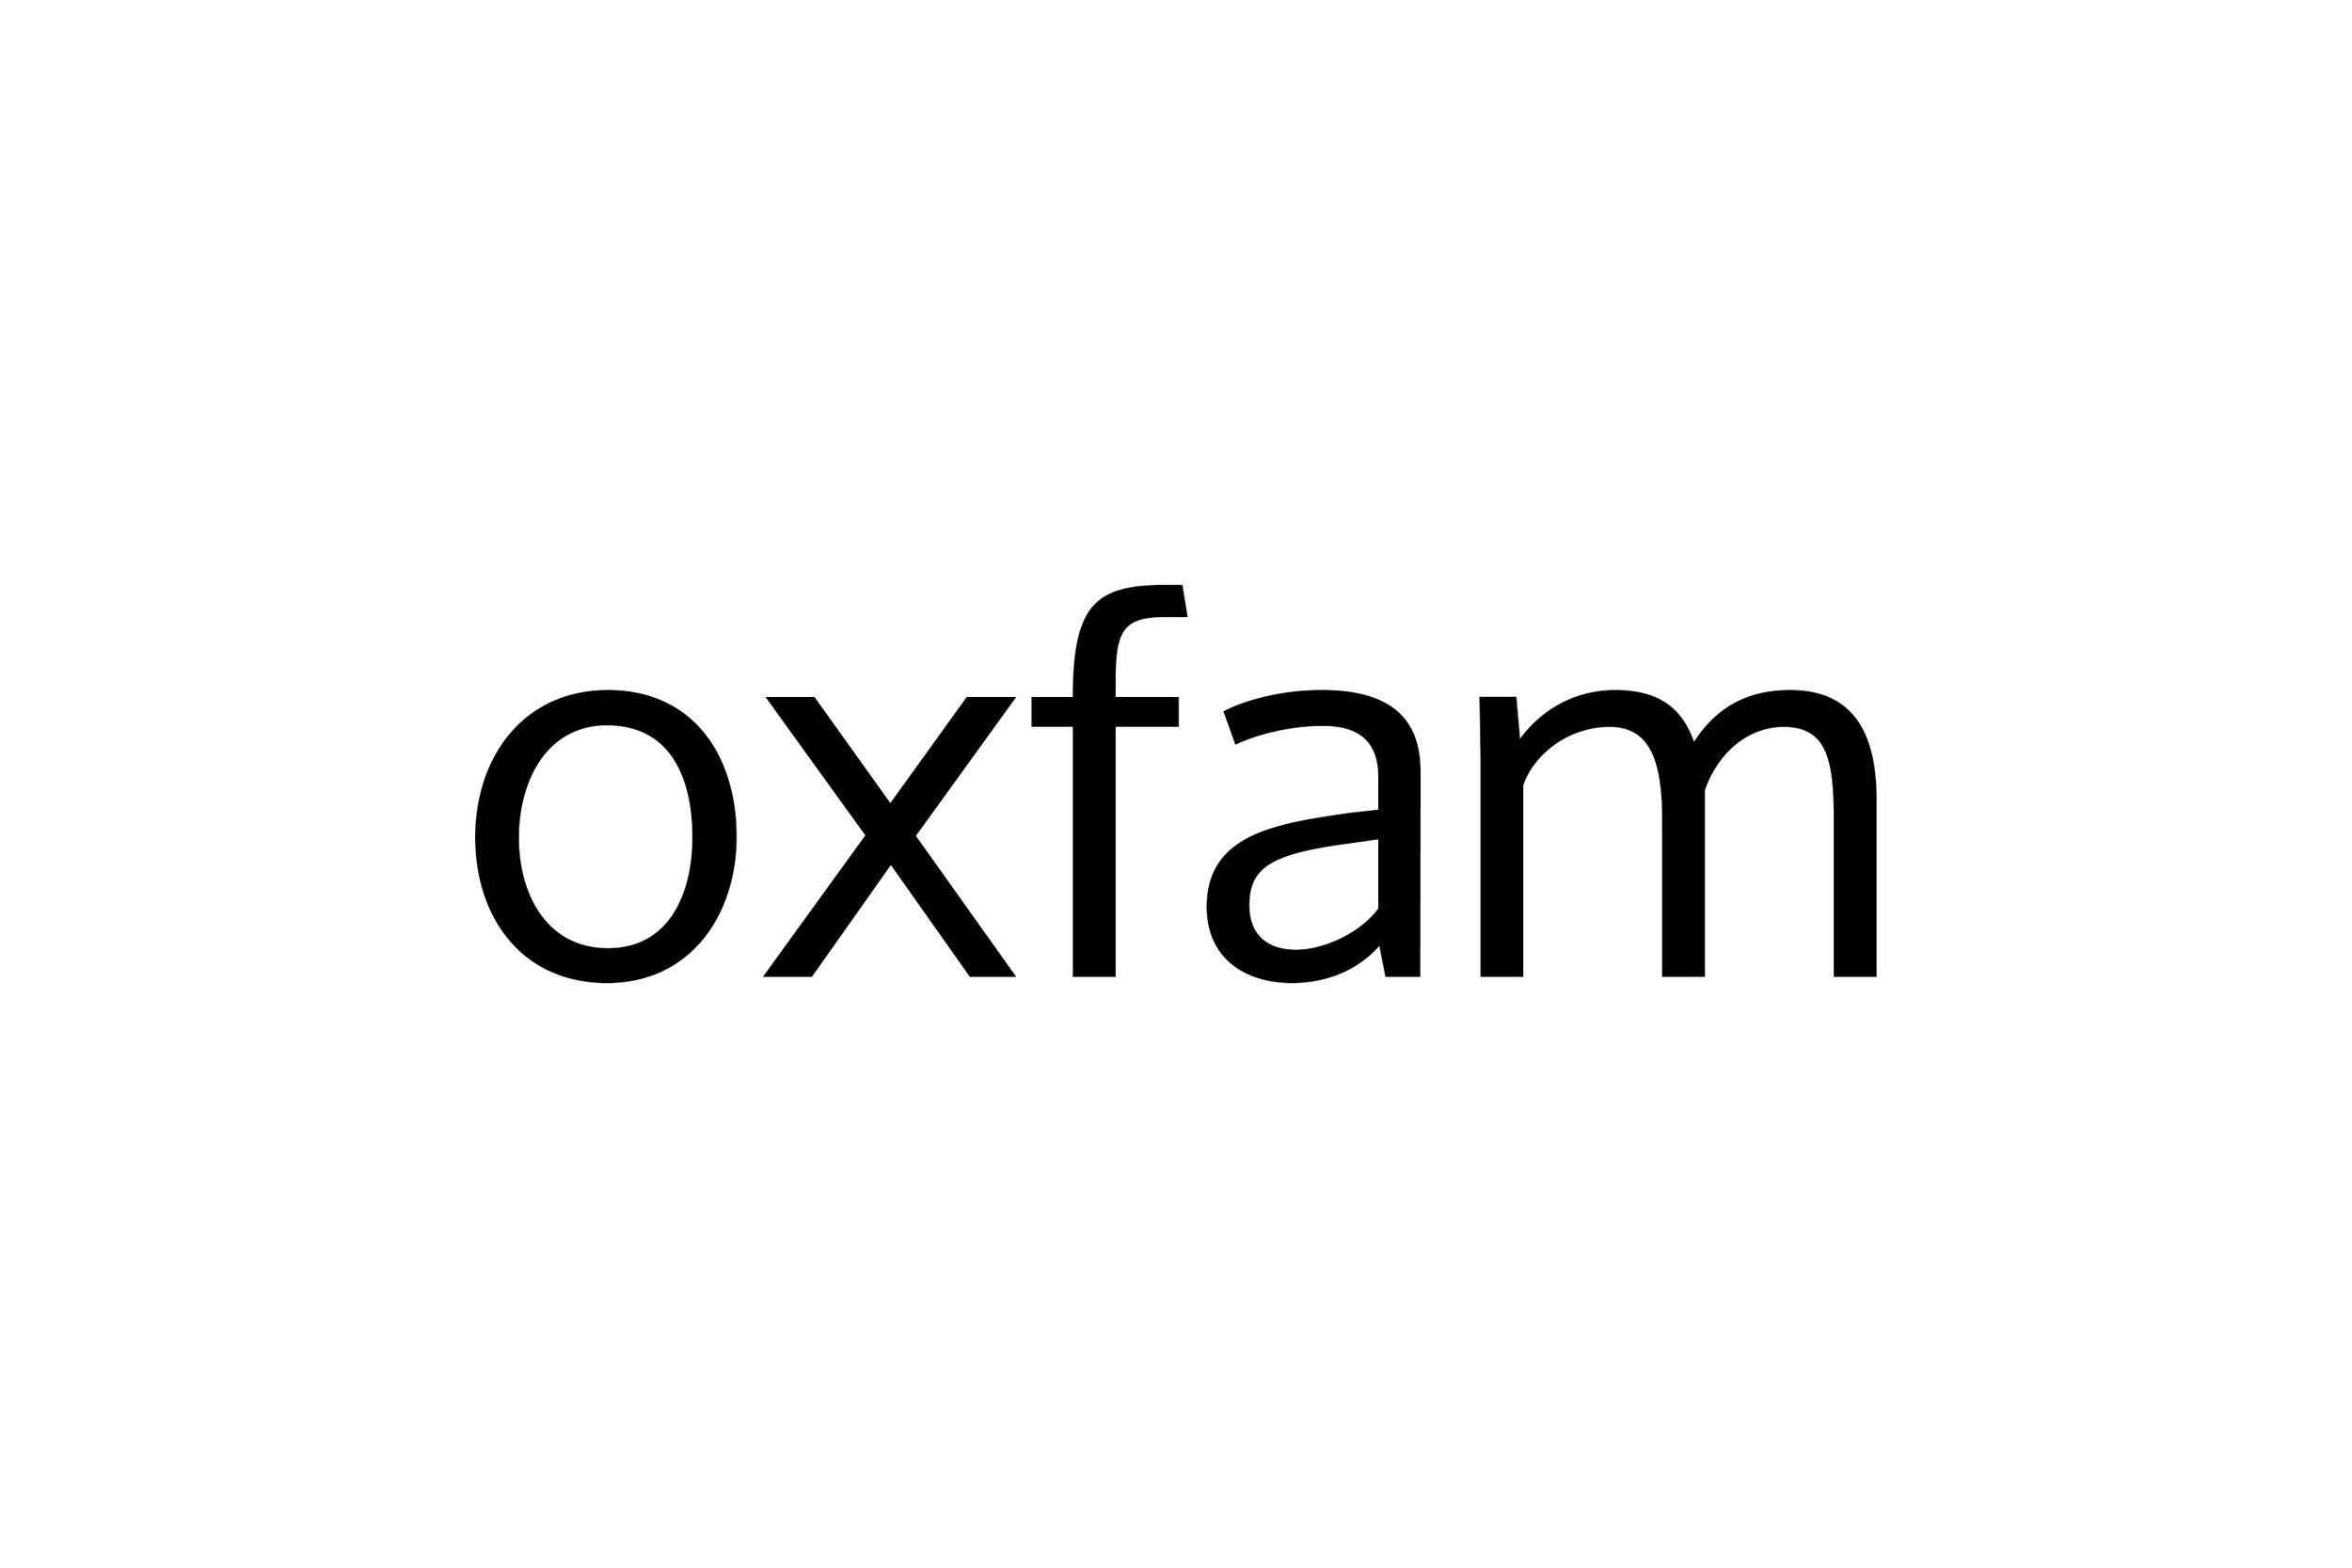 Oxfam text.jpg